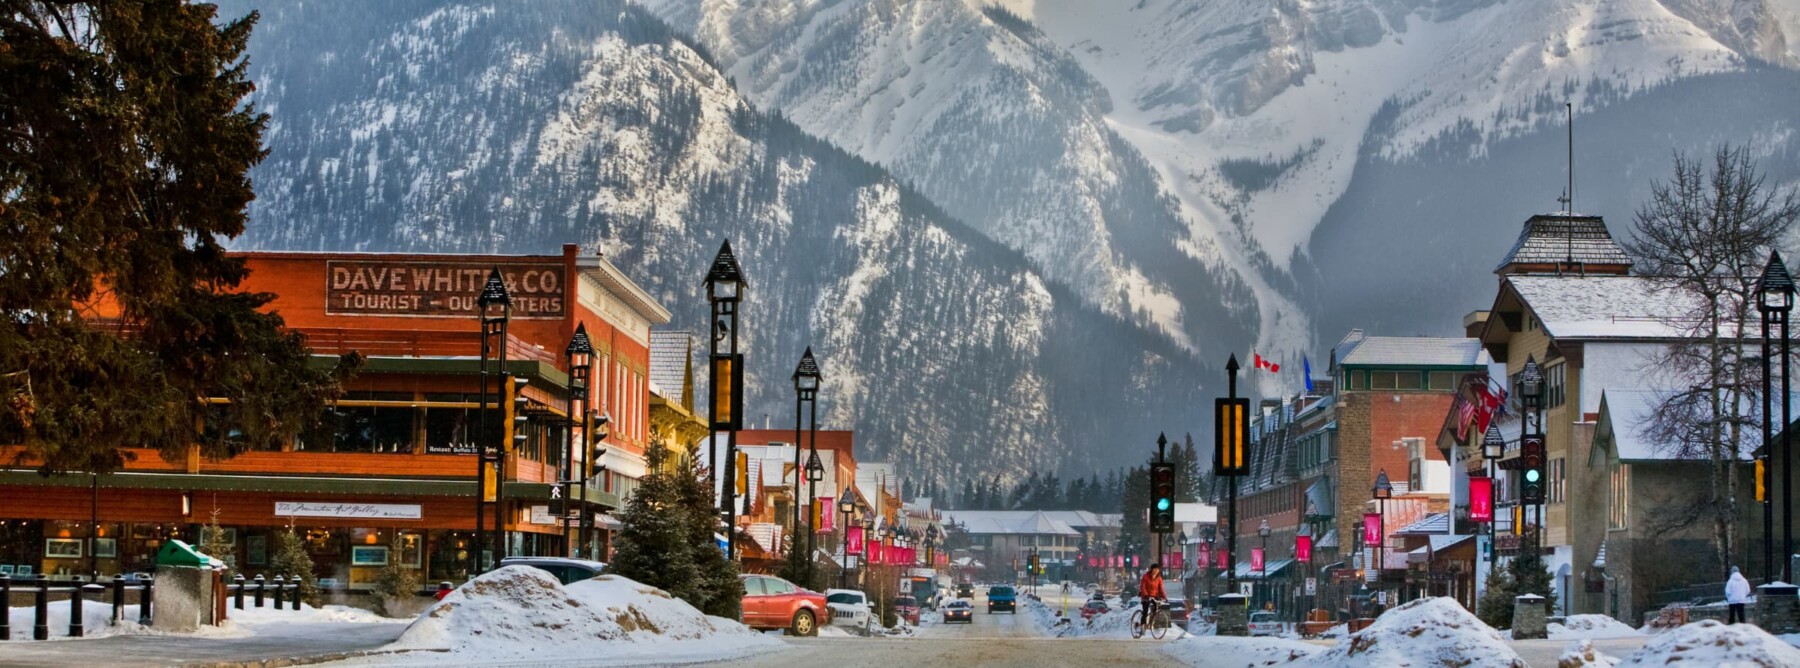 Banff town